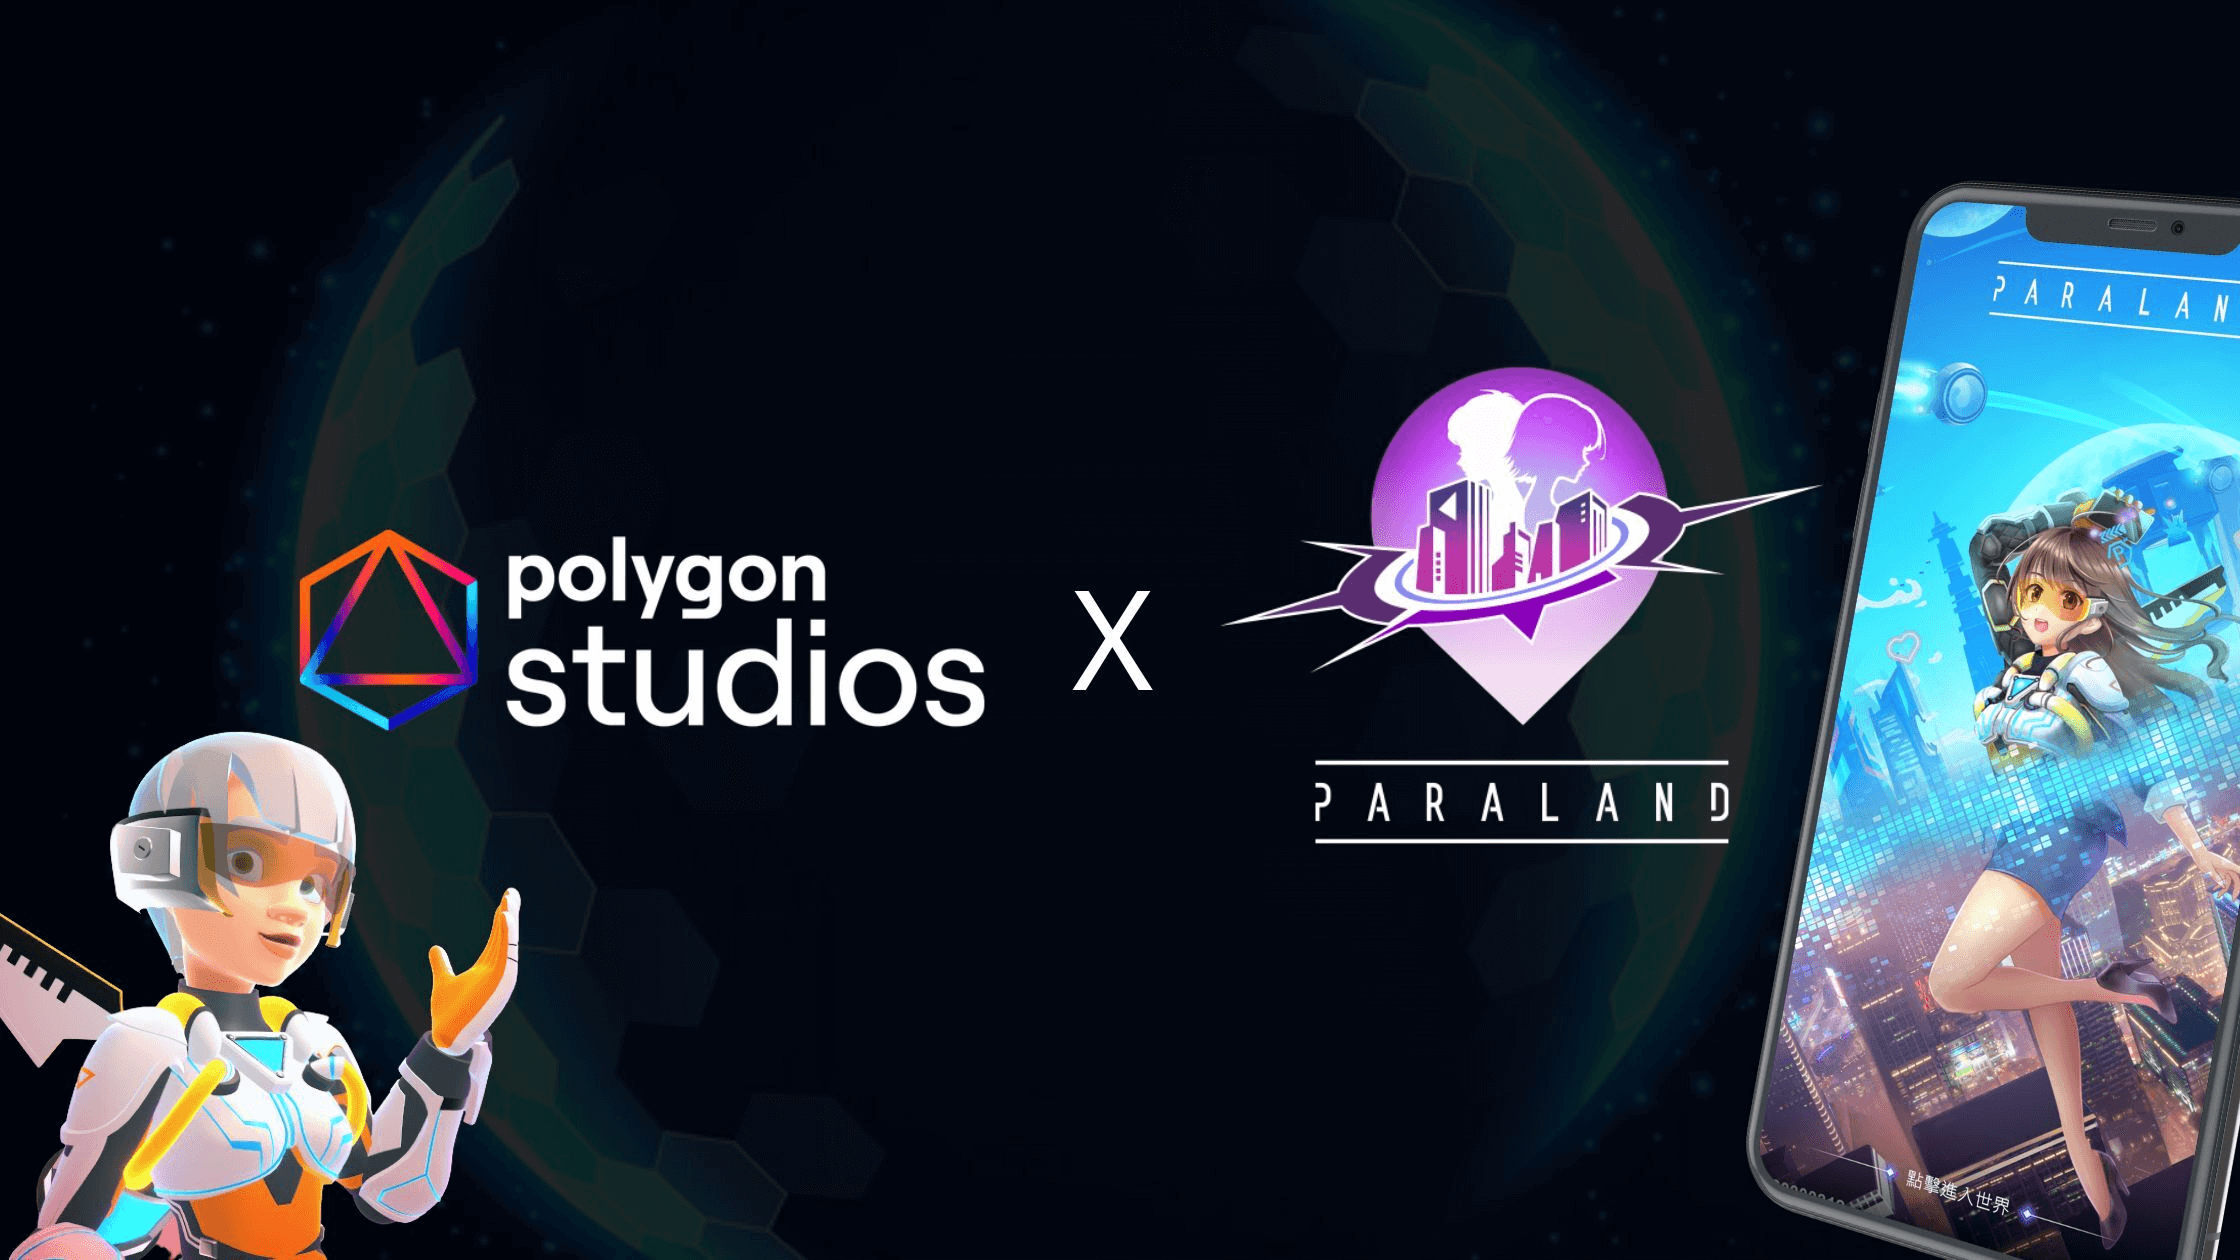 PARALAND collabed with Polygon Studios PARALAND 與 Polygon Studios 締結合作關係